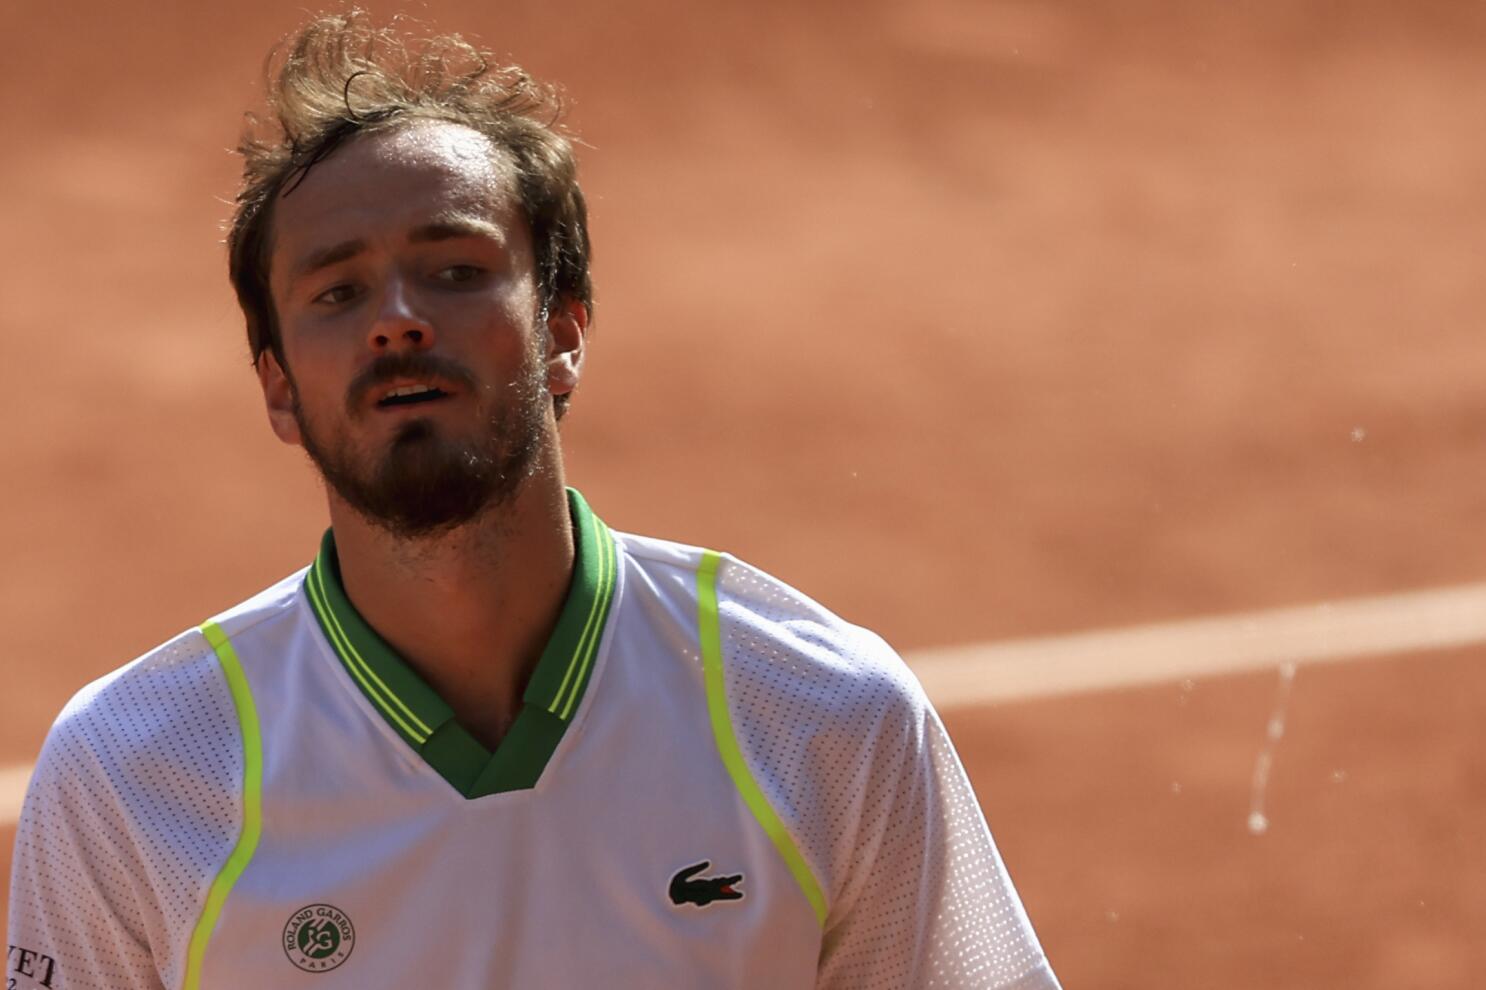 Wimbledon champion Rybakina wins Italian Open; Rune-Medvedev in men's final  - The San Diego Union-Tribune